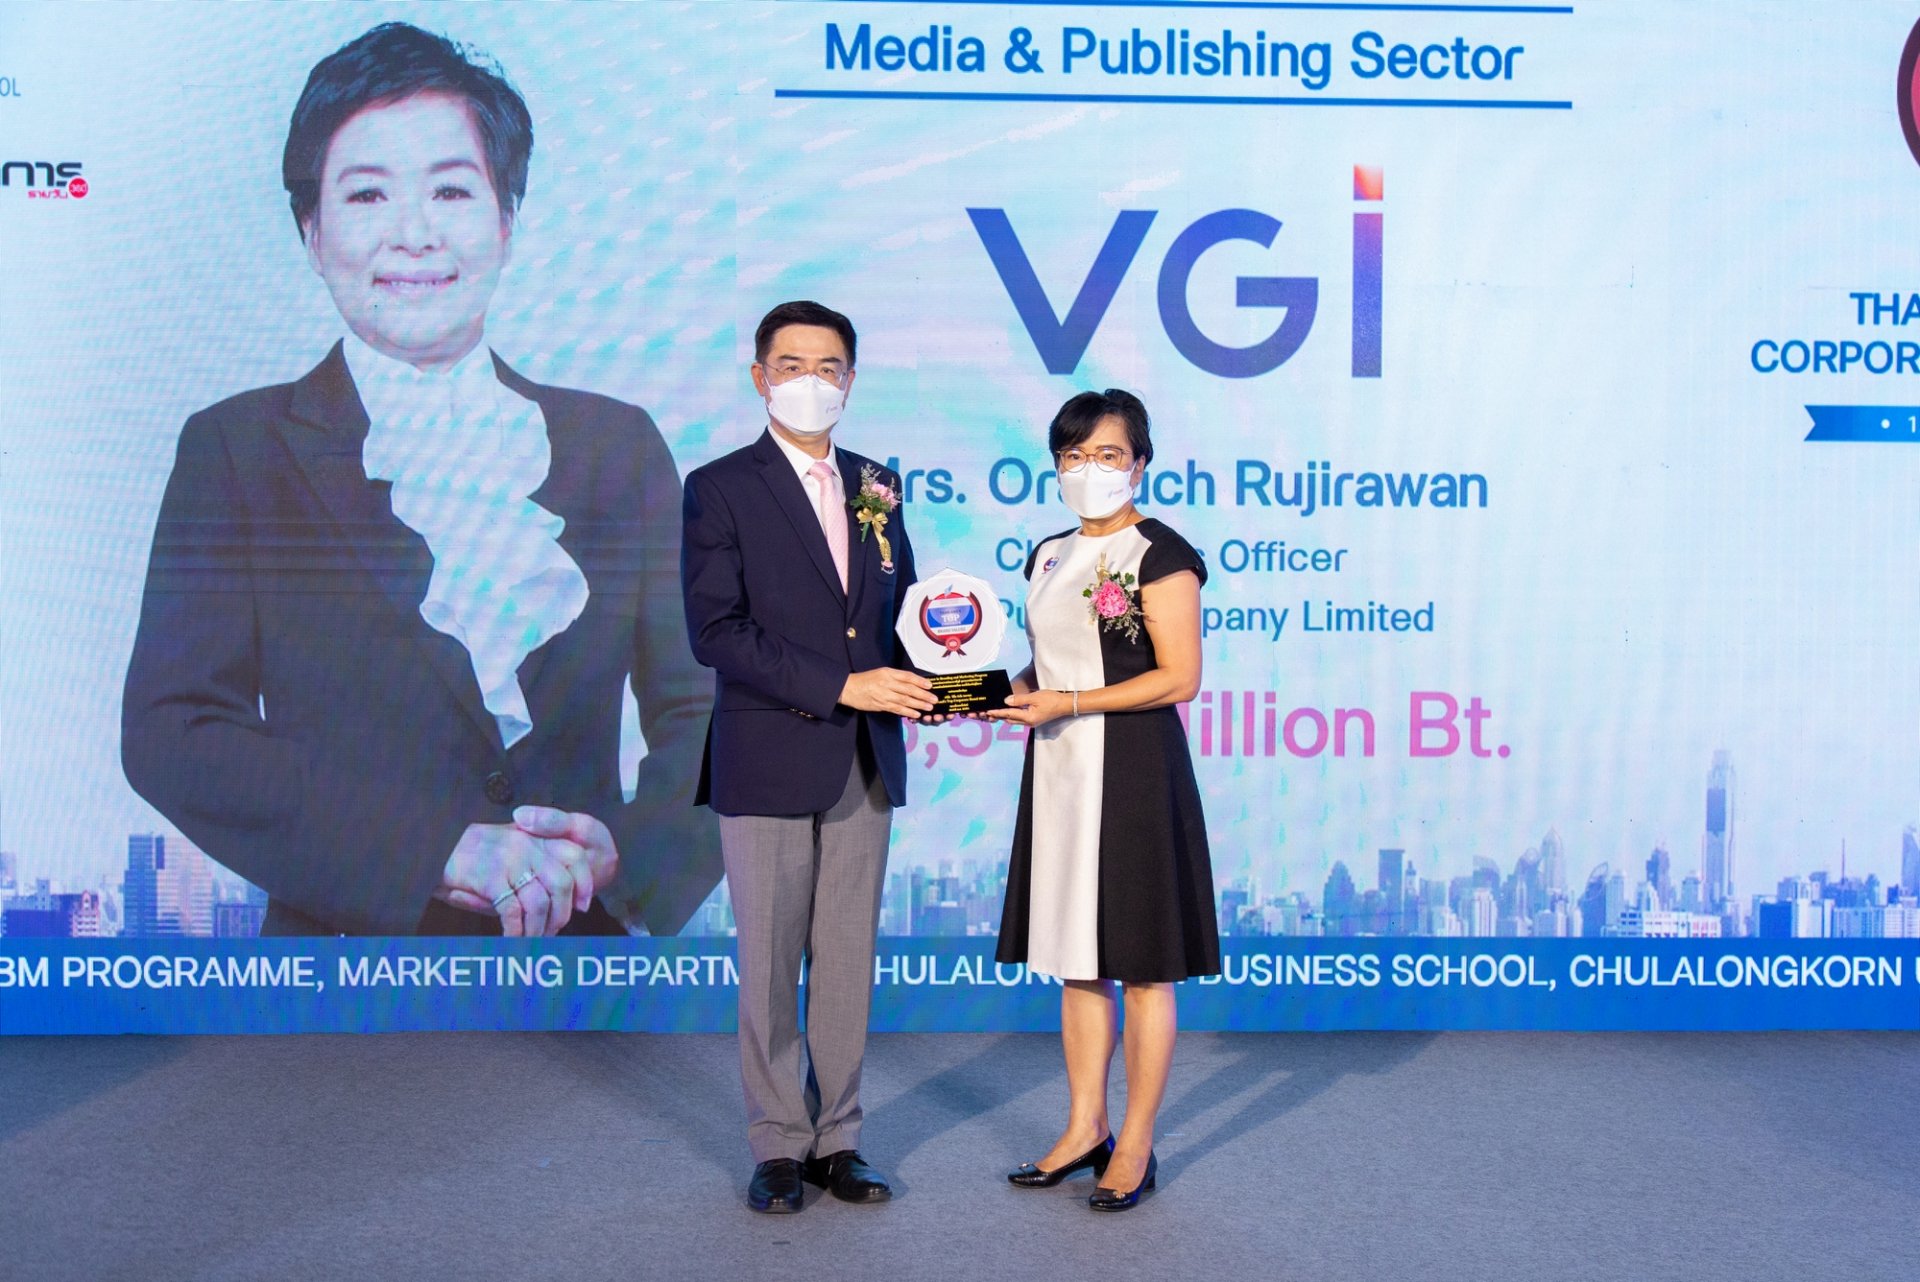 VGI คว้ารางวัล Thailand’s Top Corporate Brand 2021 สุดยอดองค์กรที่มีมูลค่าแบรนด์สูงสุด เป็นครั้งที่ 5  